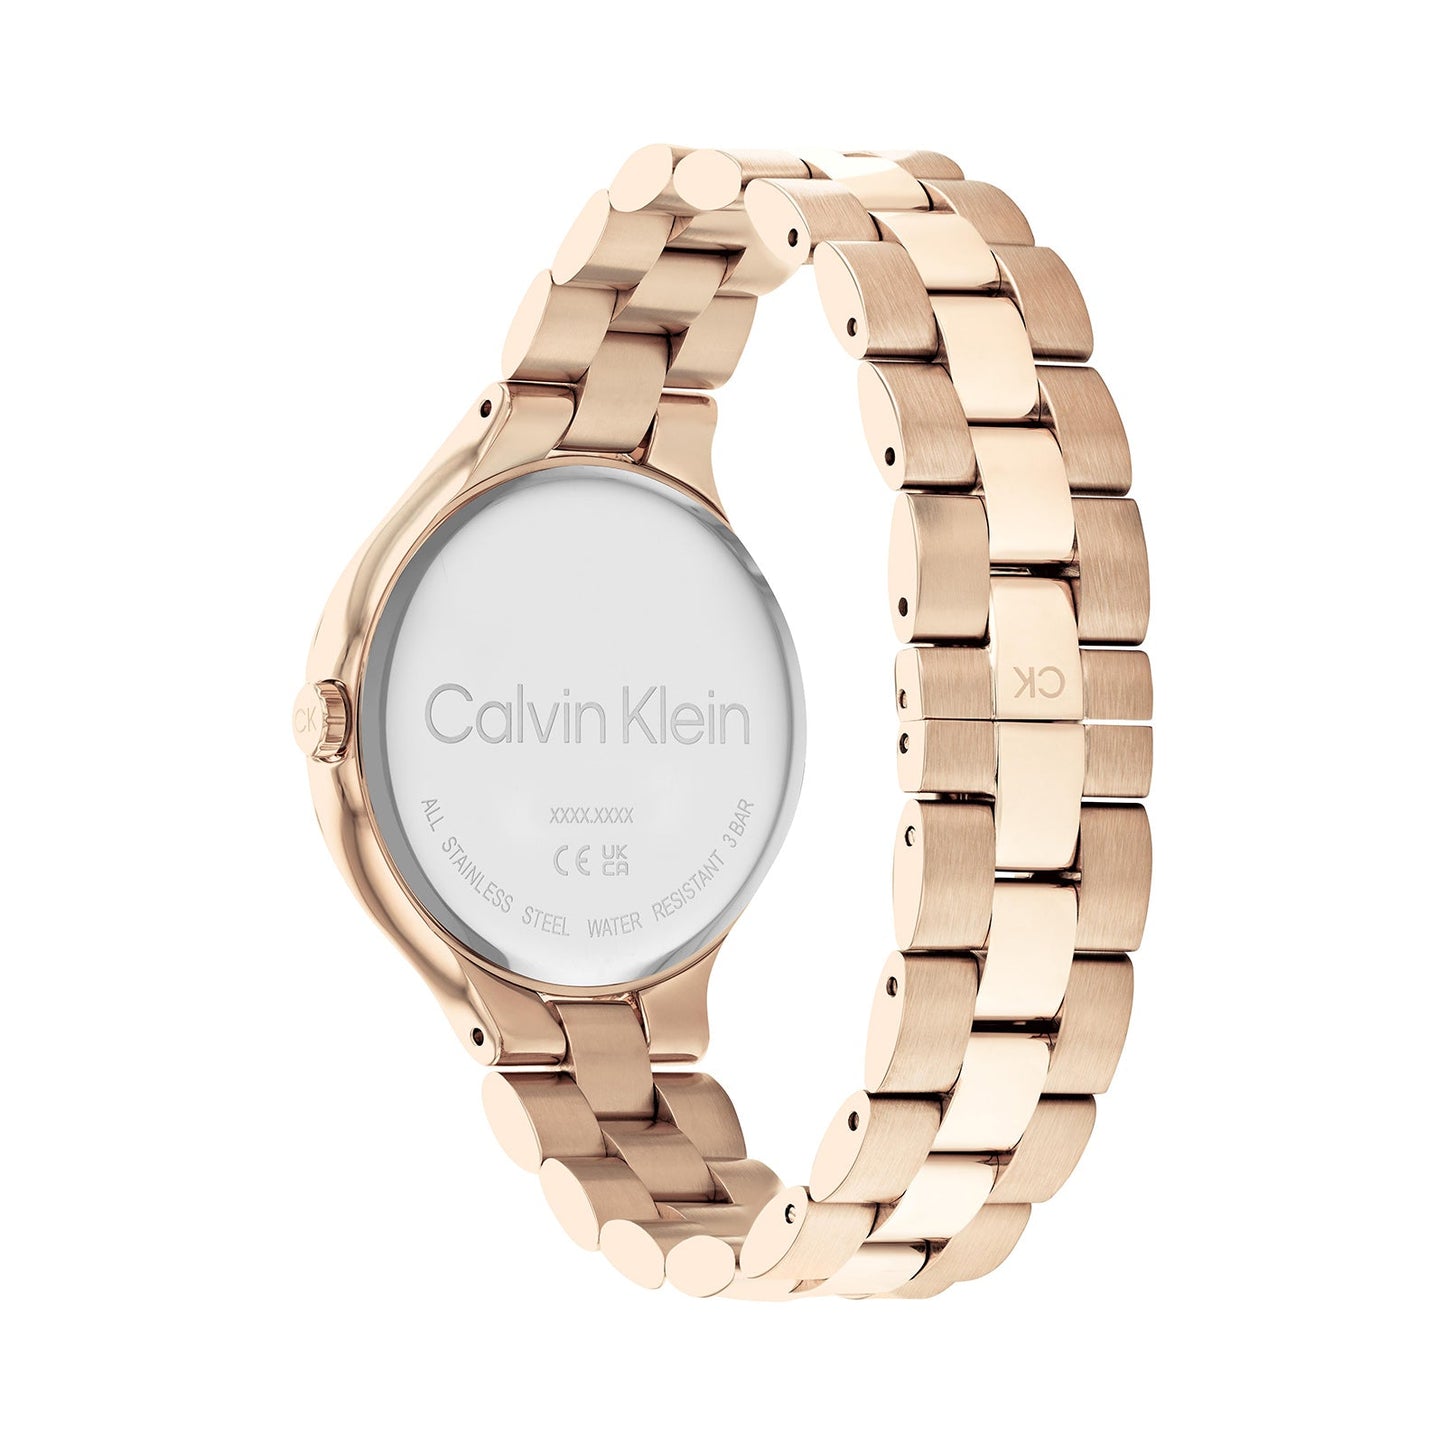 Calvin Klein 25200125 Women's Steel Watch